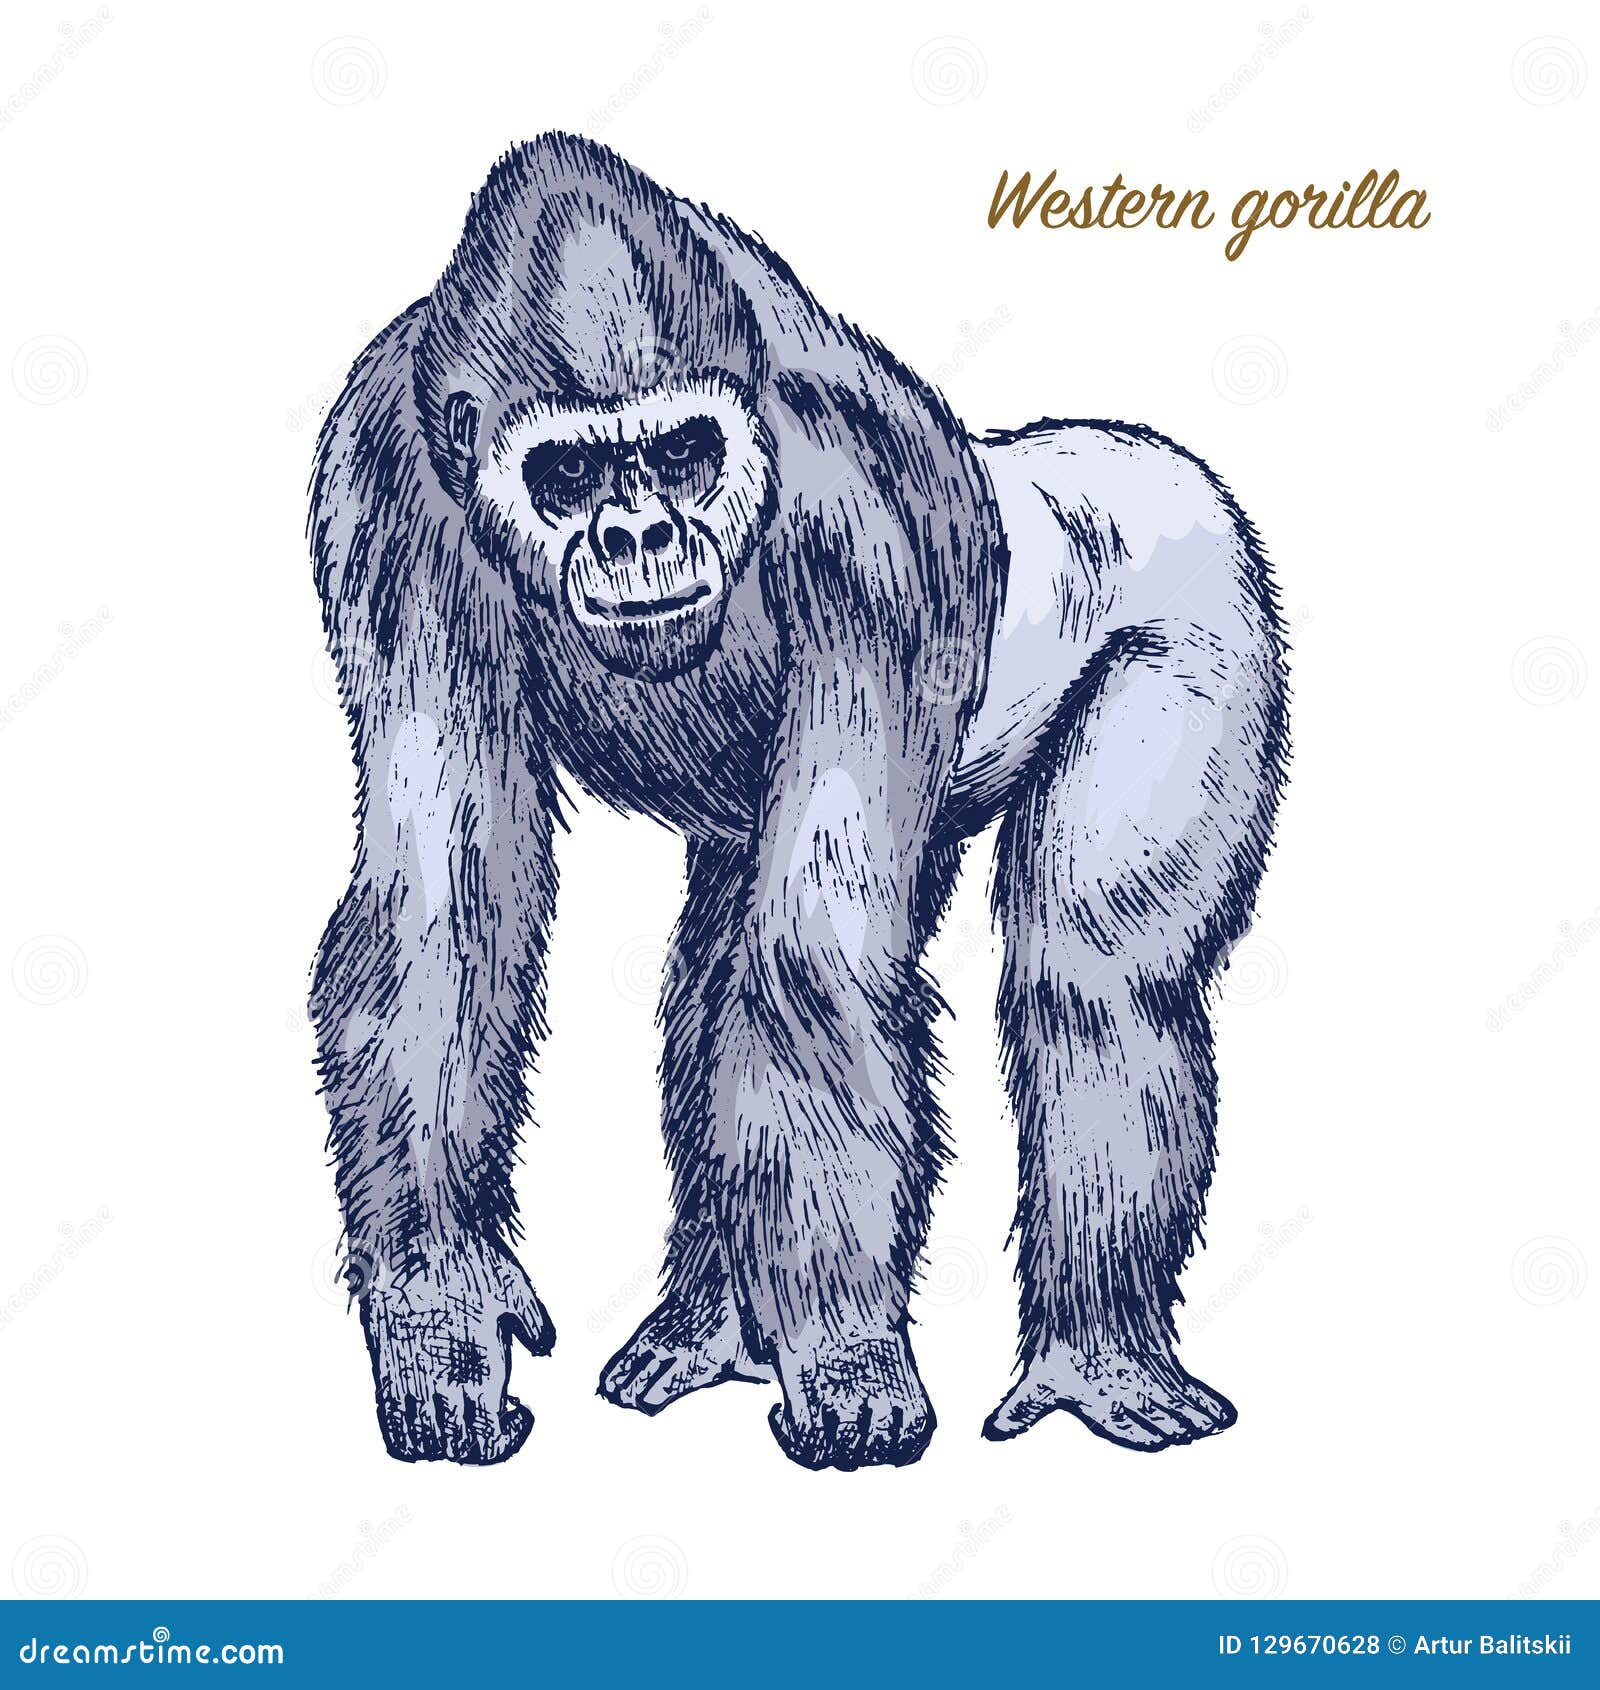 western or mountain gorilla. big monkey or primate. hand drawn, engraved wild animal in vintage or retro style, zoology